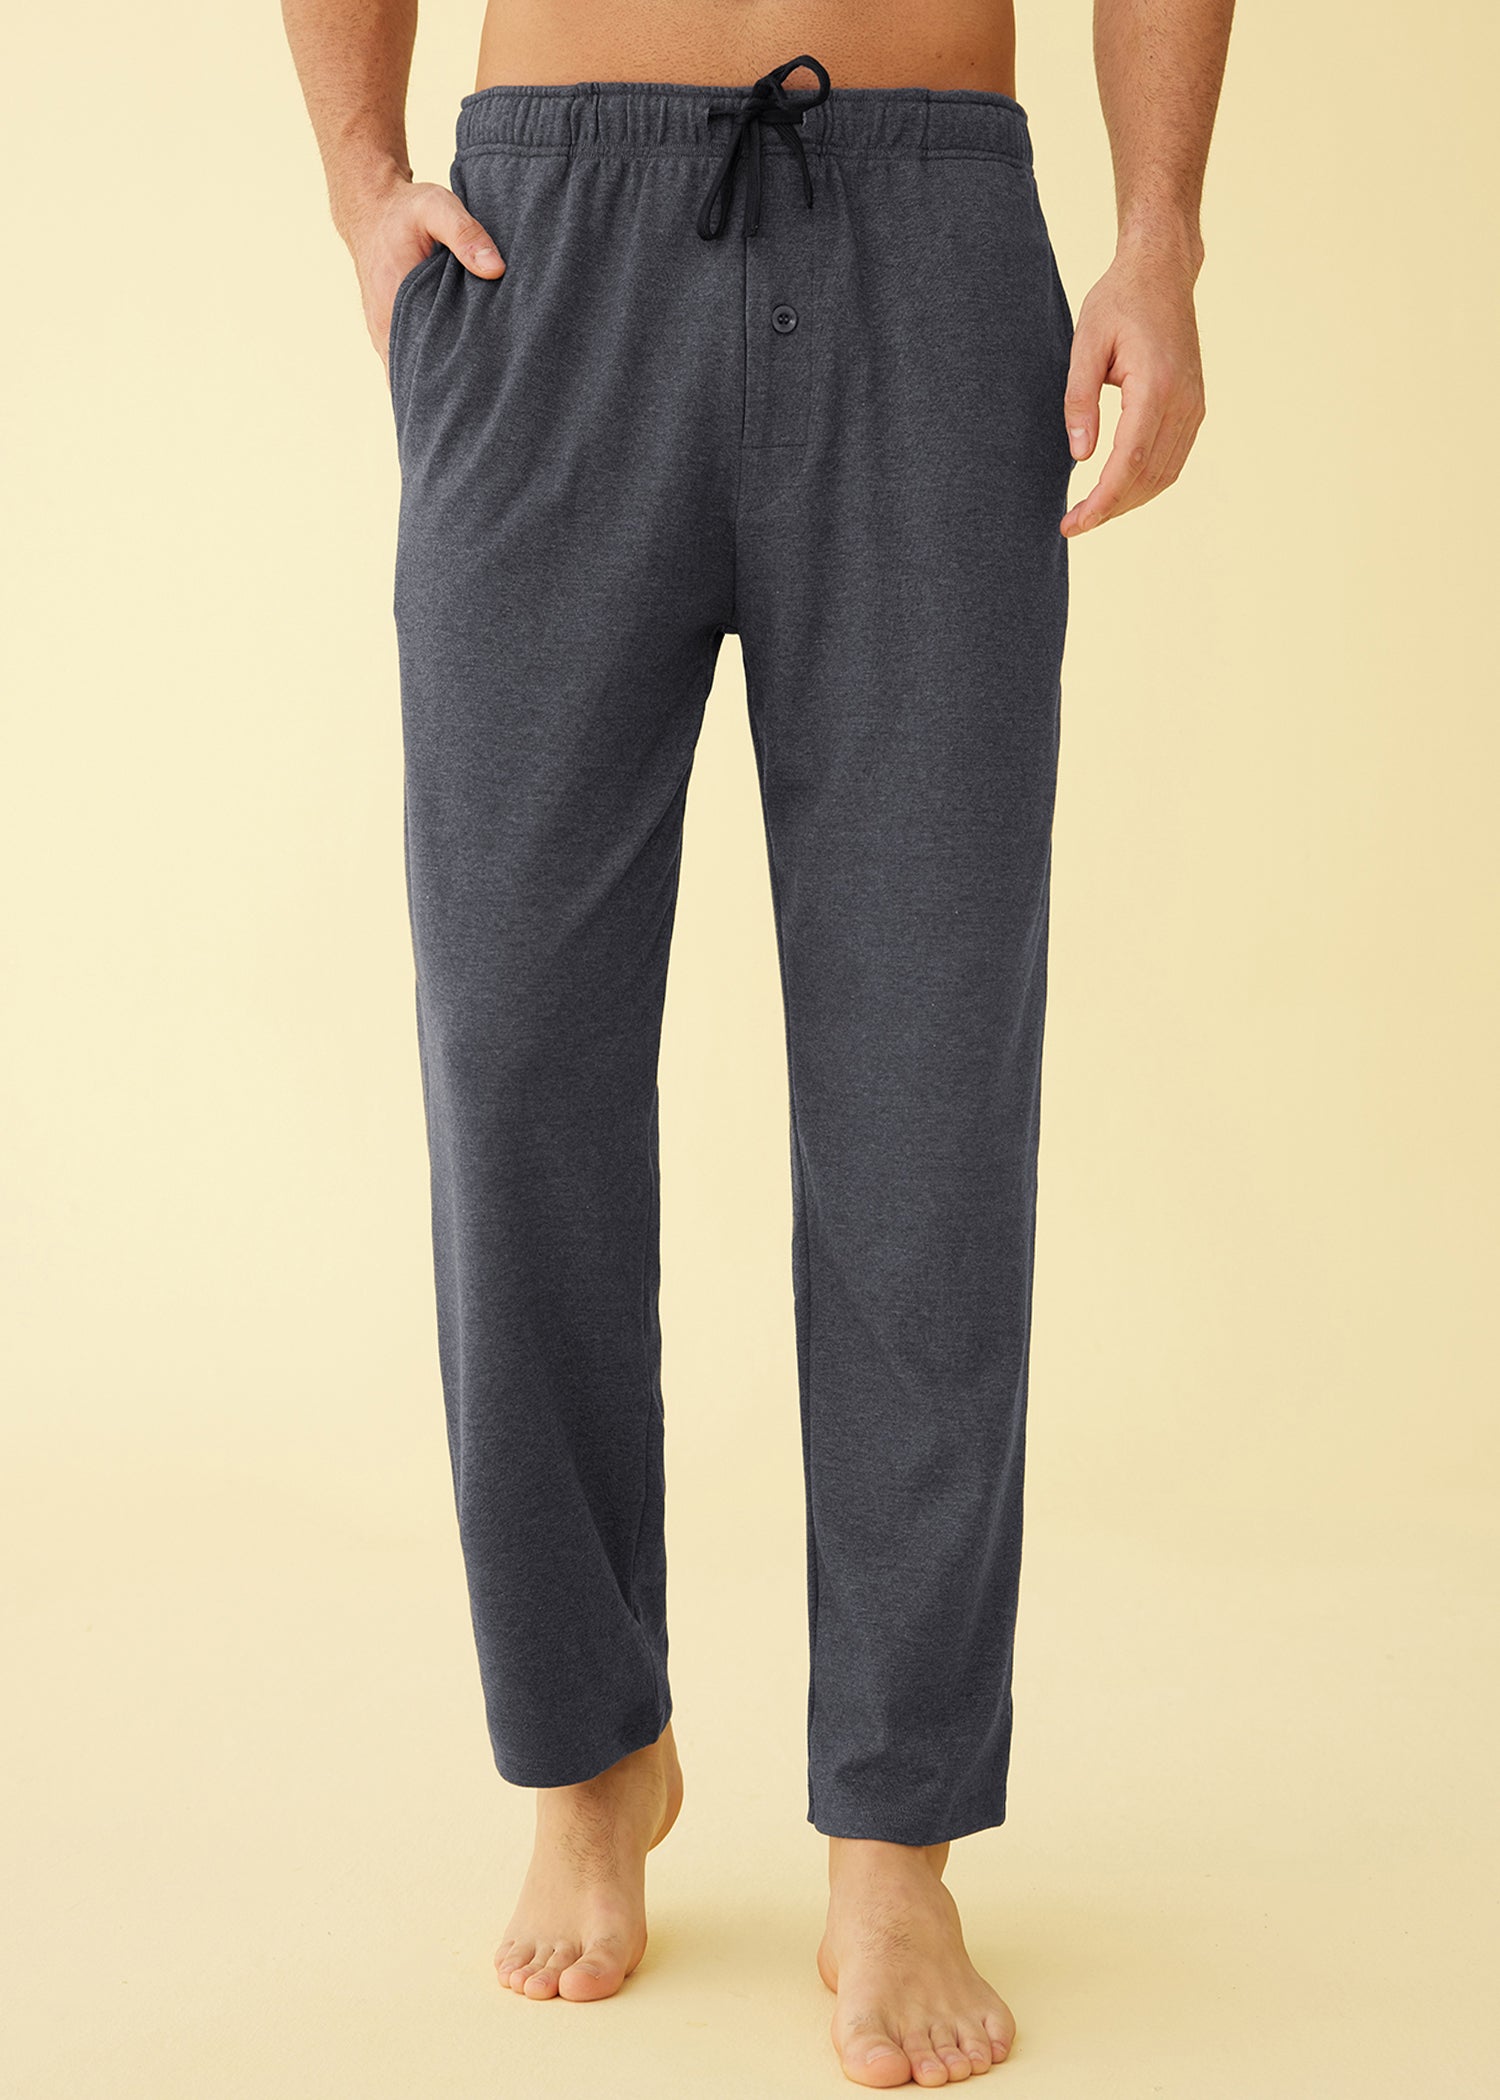 MoFiz Men's Pajama Bottom Pants Cotton Plaid Slpeapwear Loungewear Pants  House Wear 3-PACK Size S at Amazon Men's Clothing store